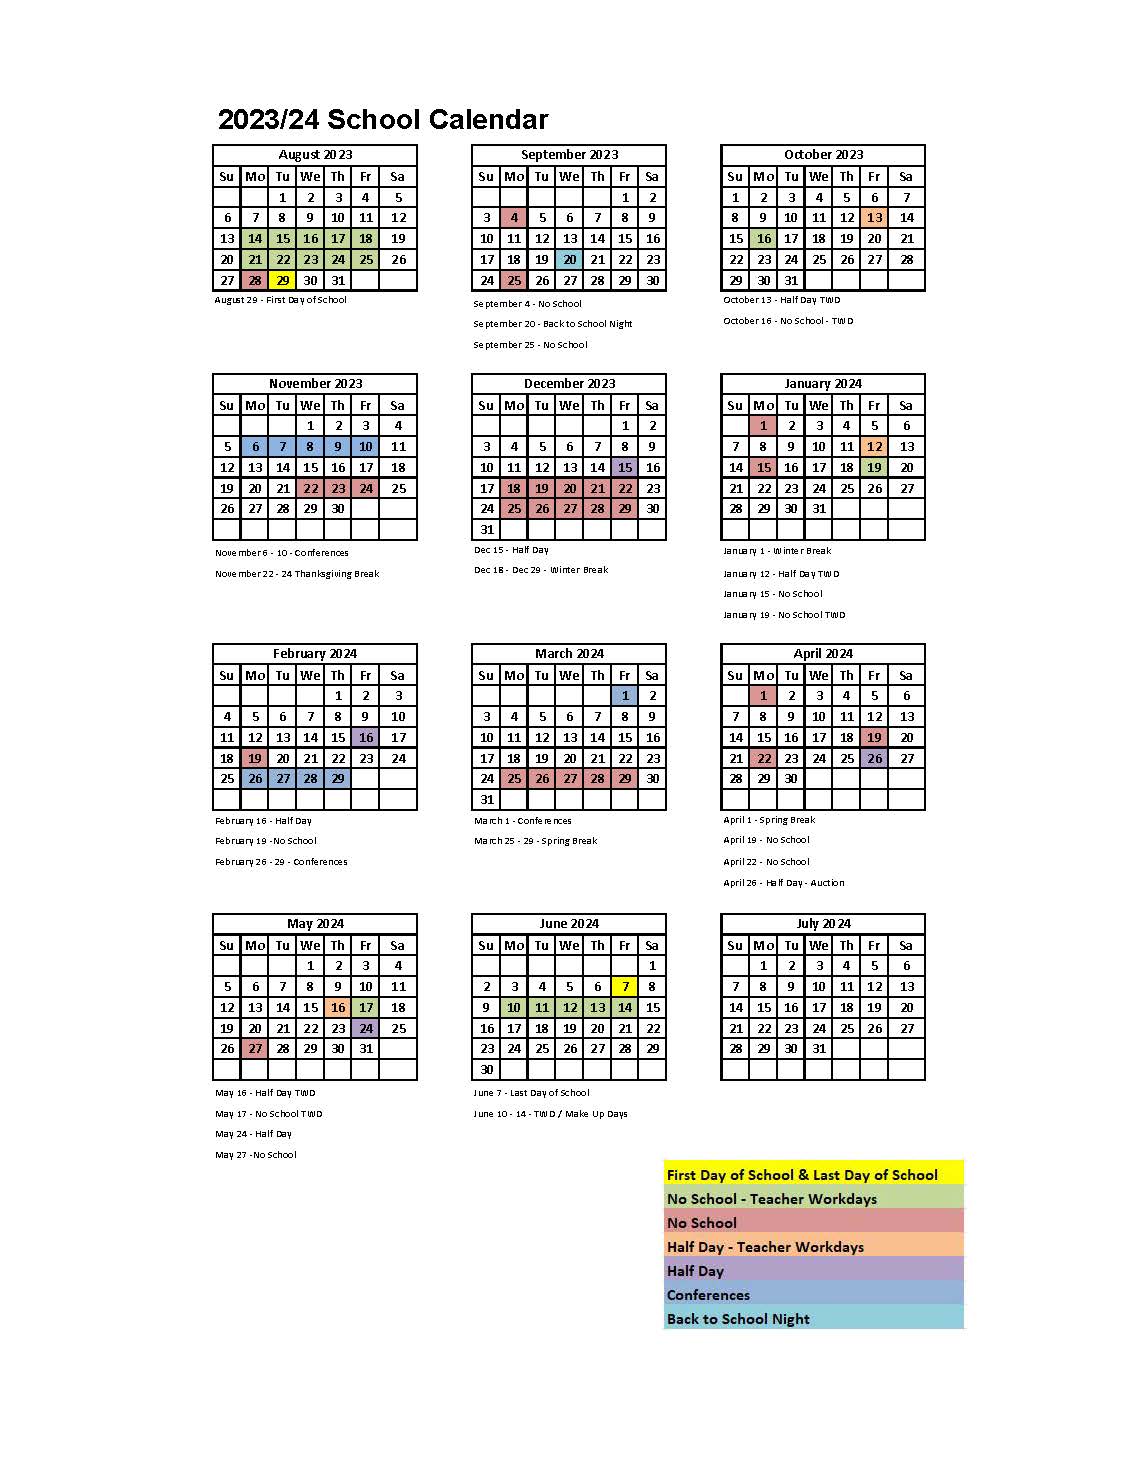 Updated 2023-2024 Calendar-8-14